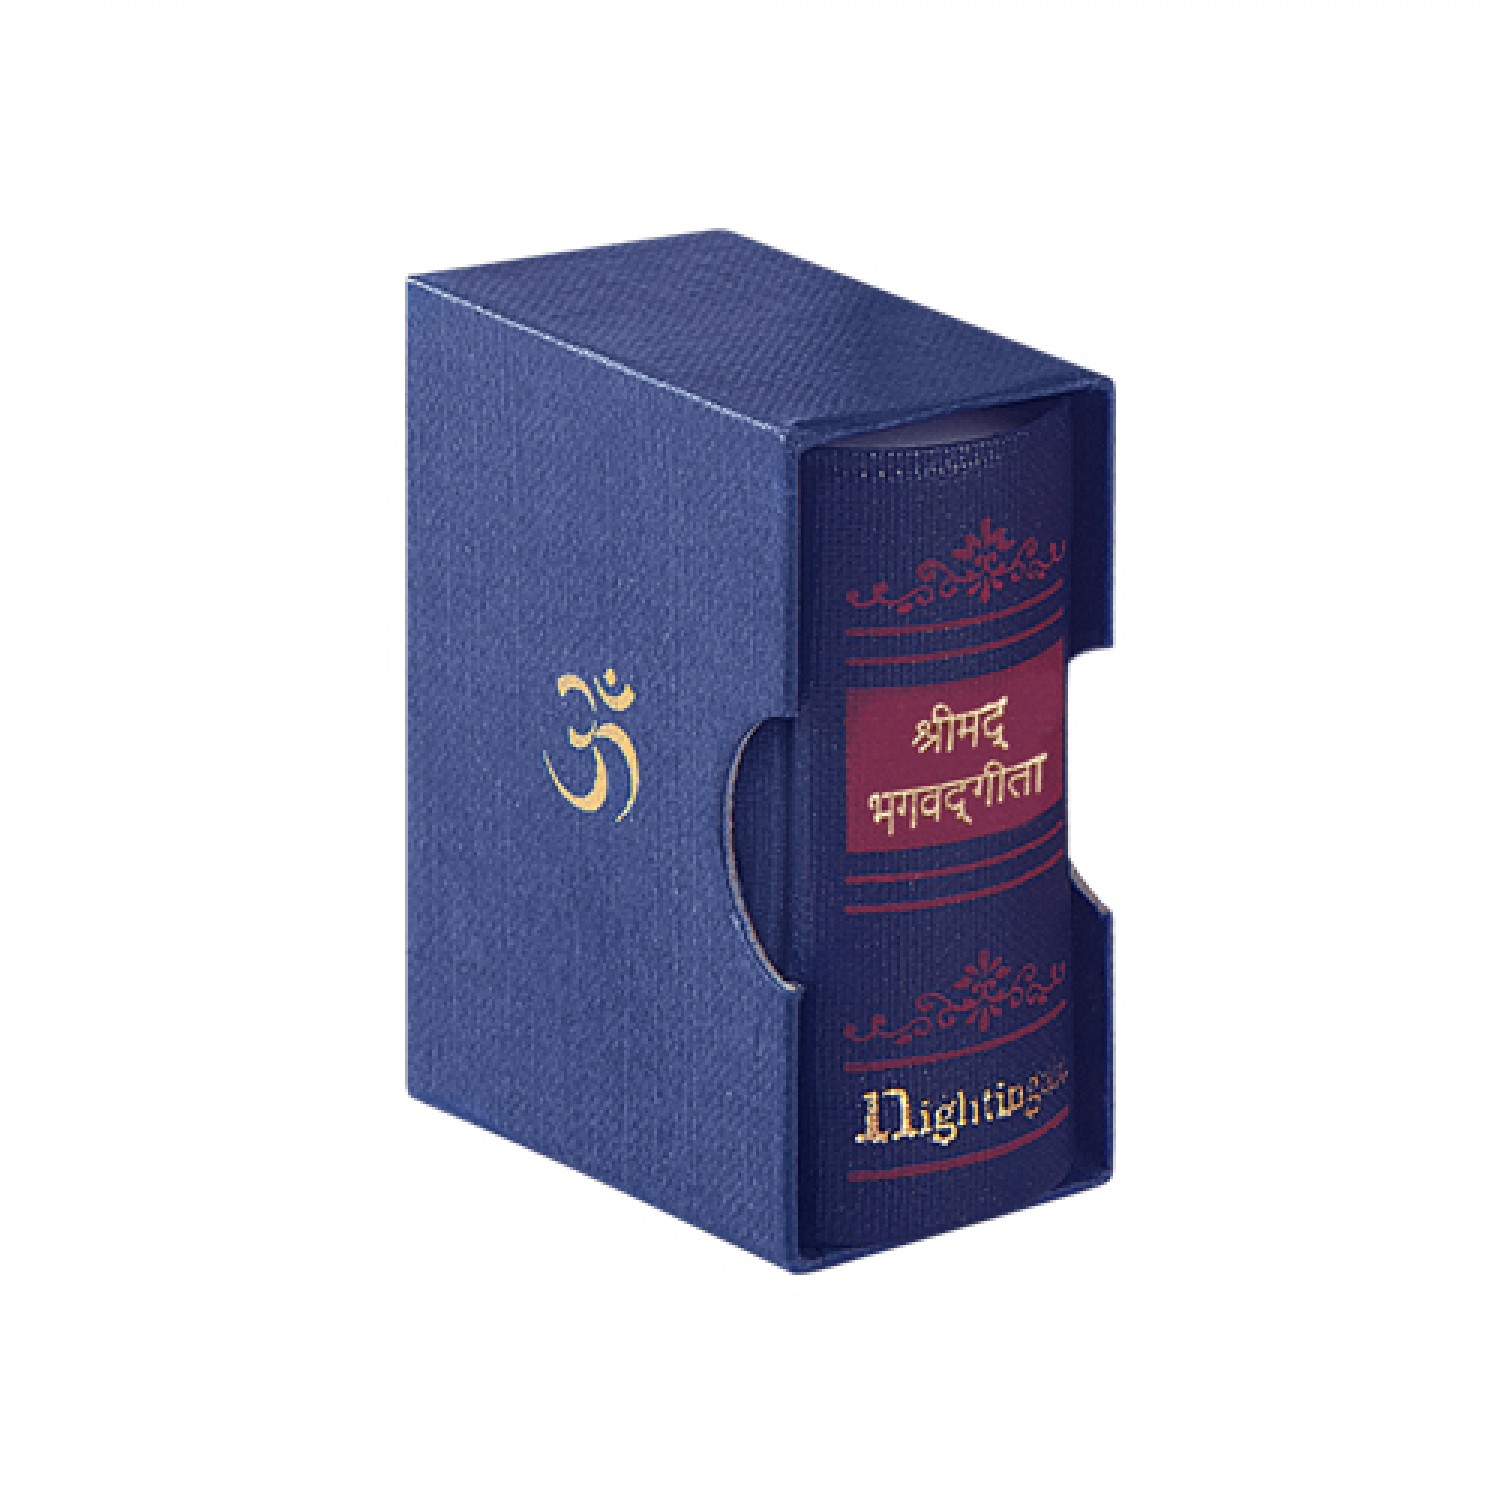 bhagavad-gita-a9-hindi-pocket-edition-books-books